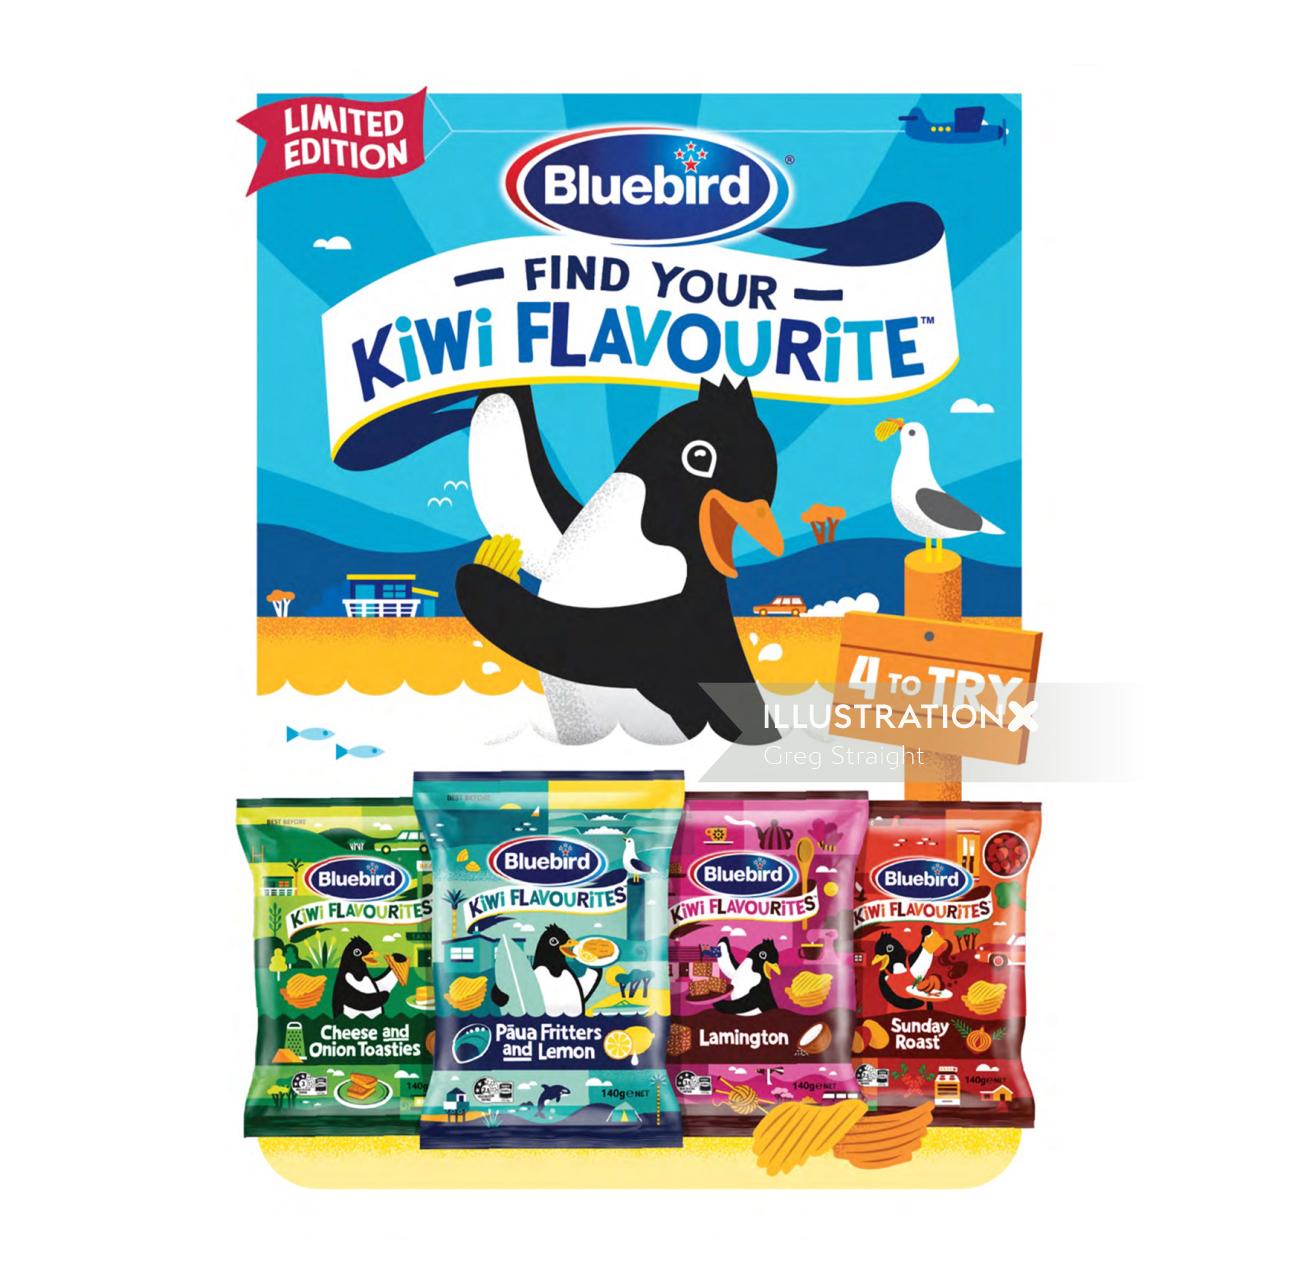 Blue Bird kiwi flavourite chips advertising poster 